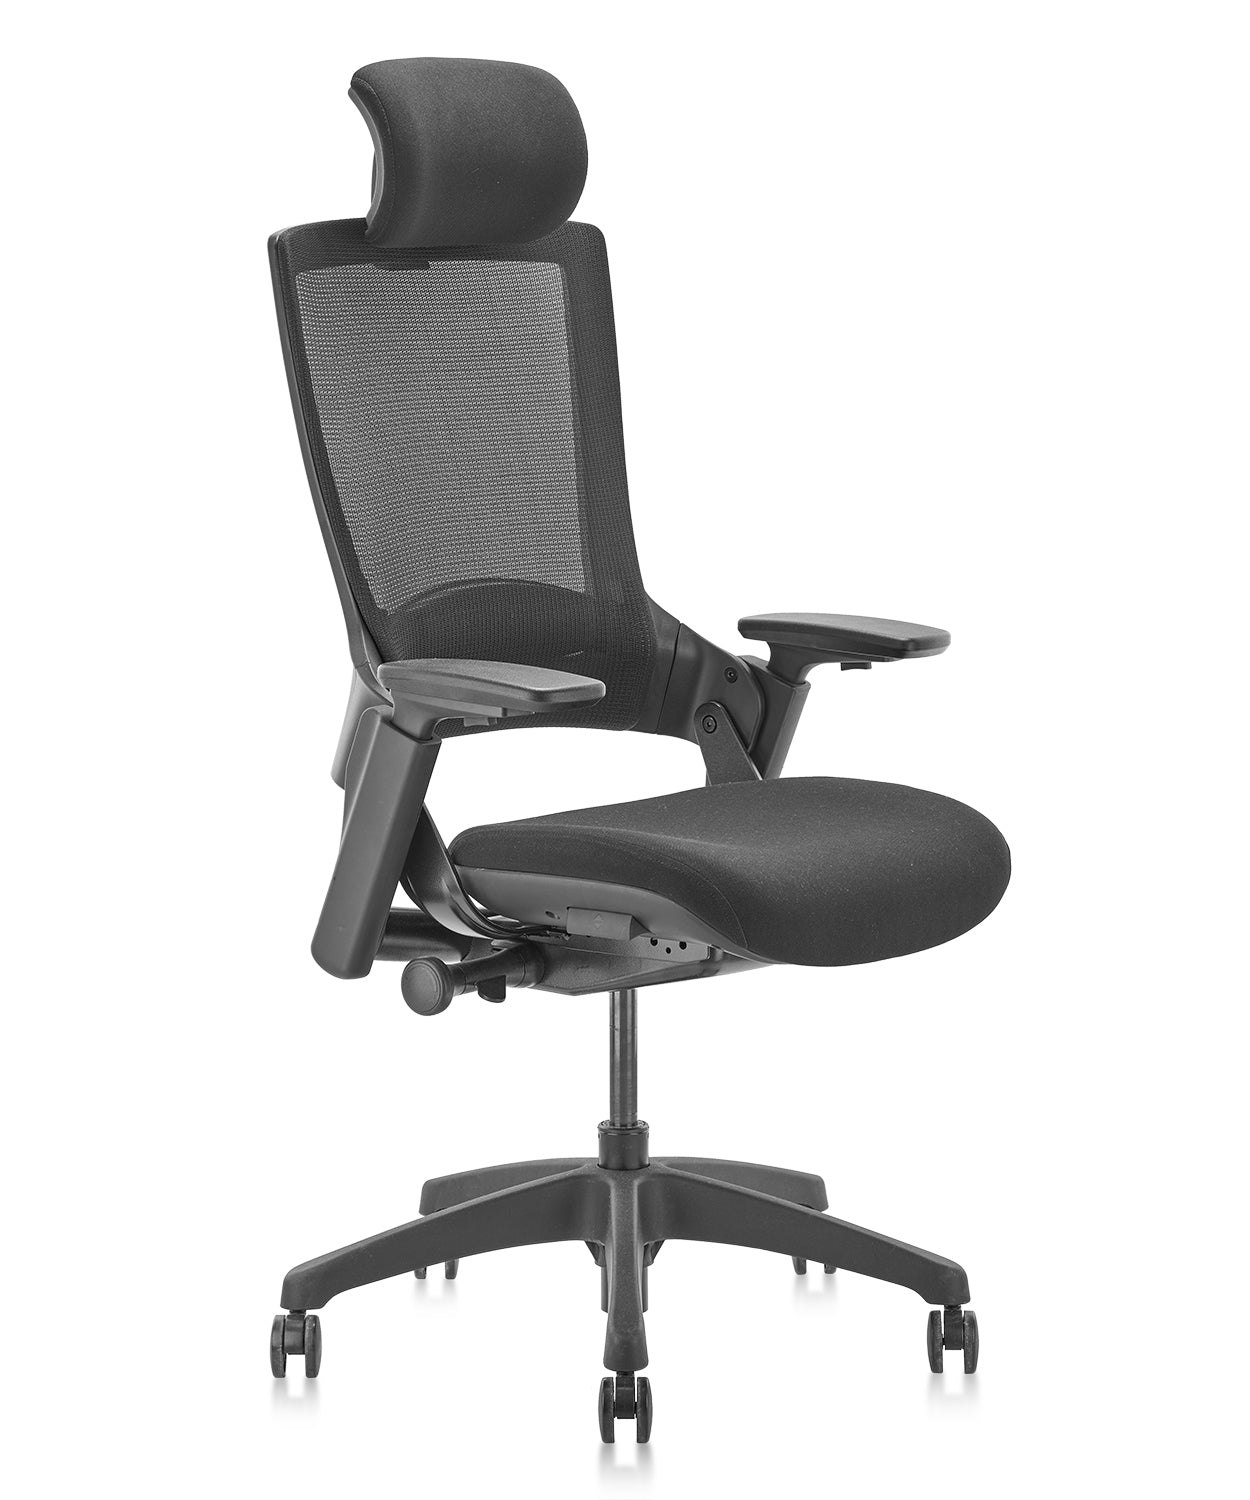 CLATINA Ergonomic High Swivel Executive Chair with Adjustable